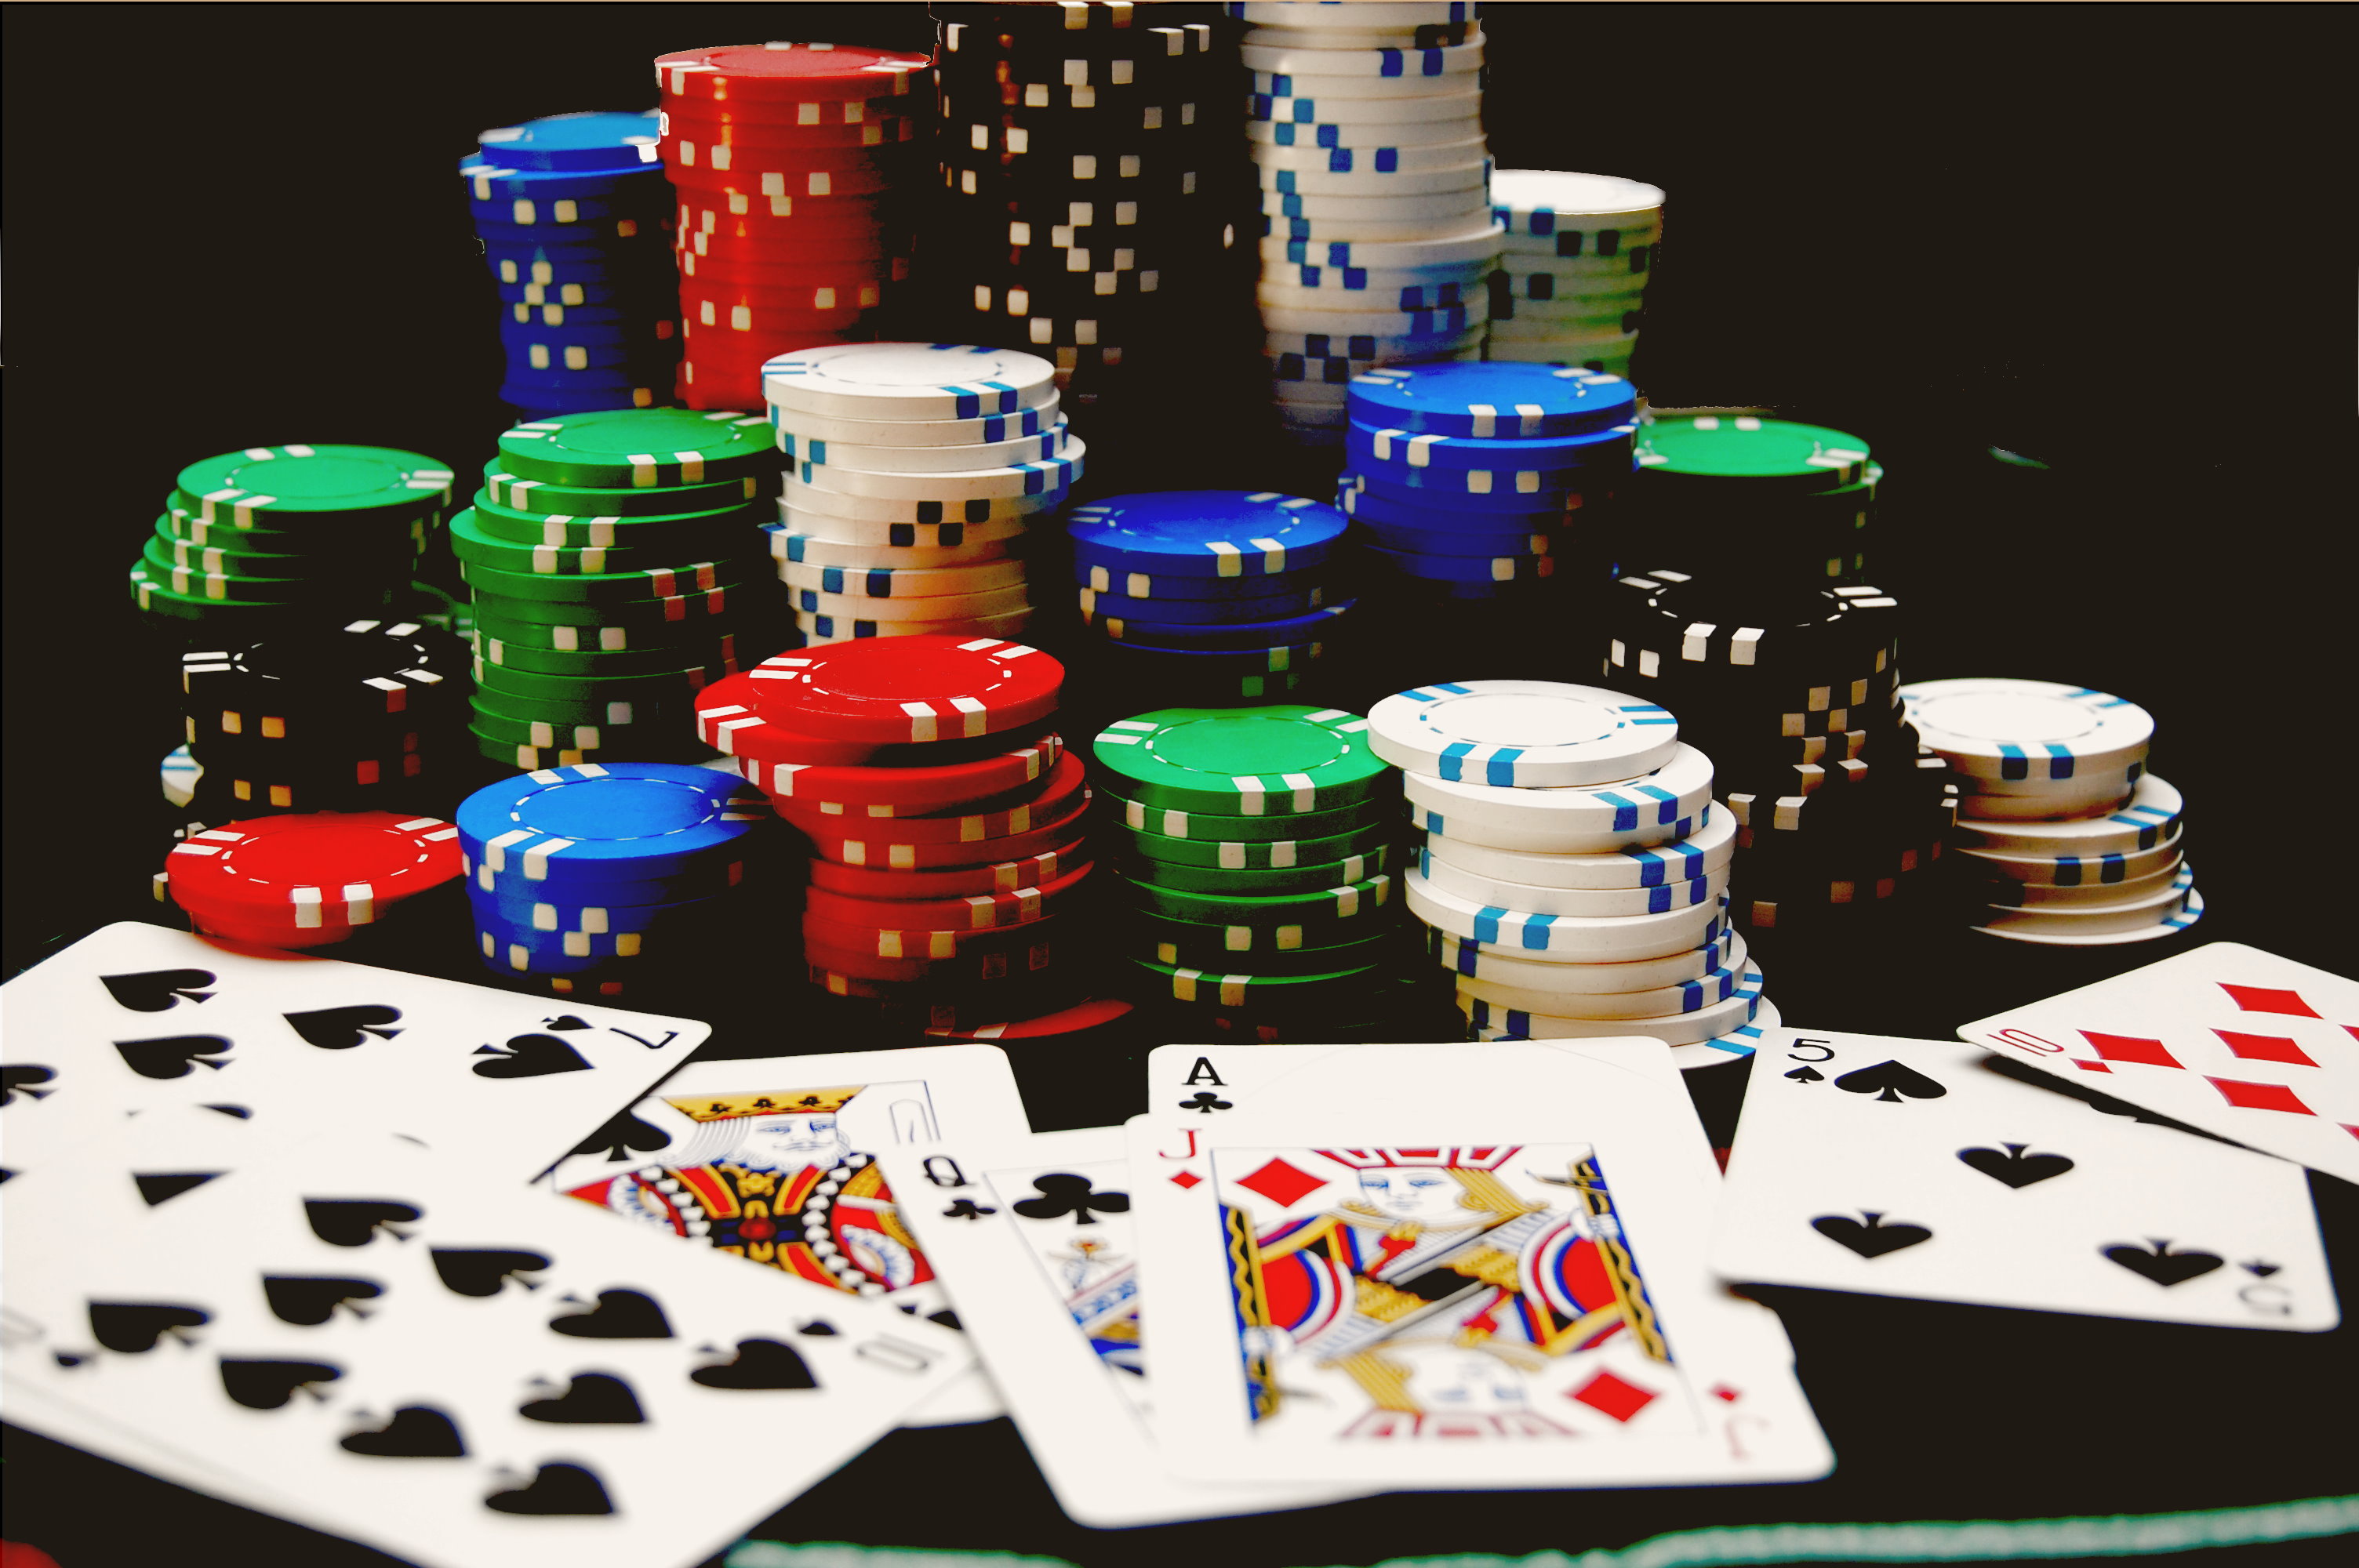 Free Casino Games 3 Card Poker